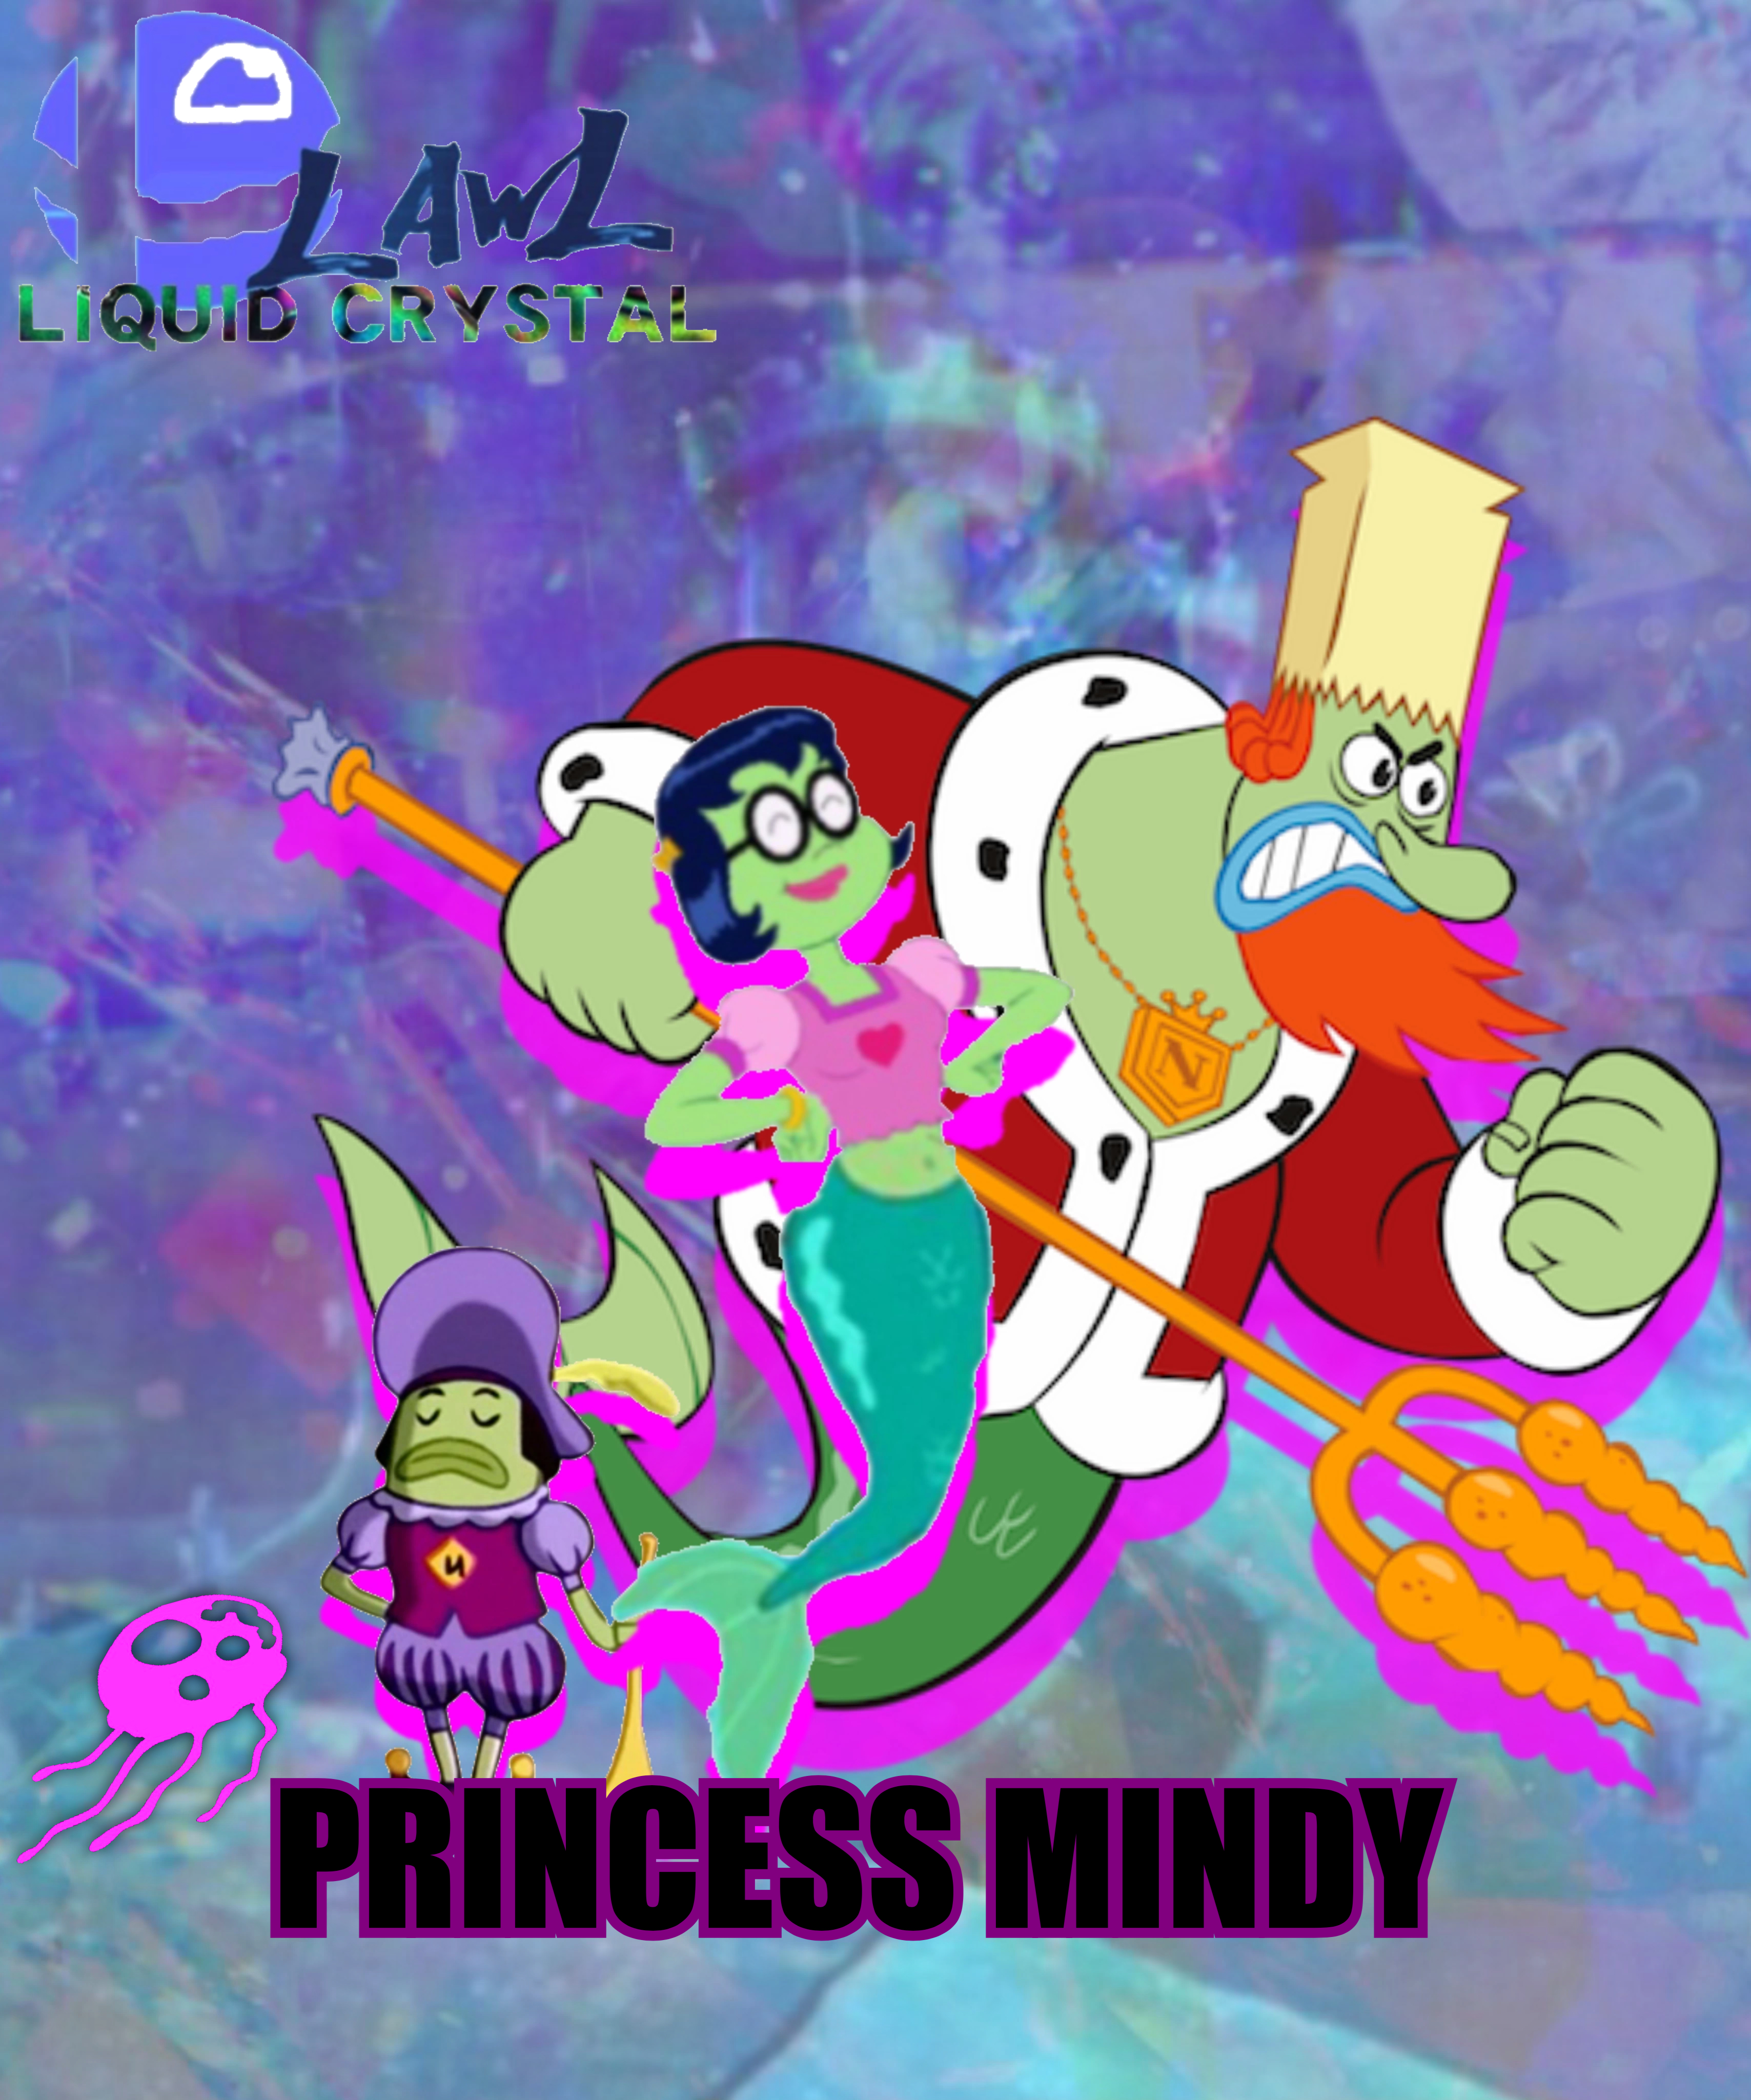 the spongebob squarepants movie mindy